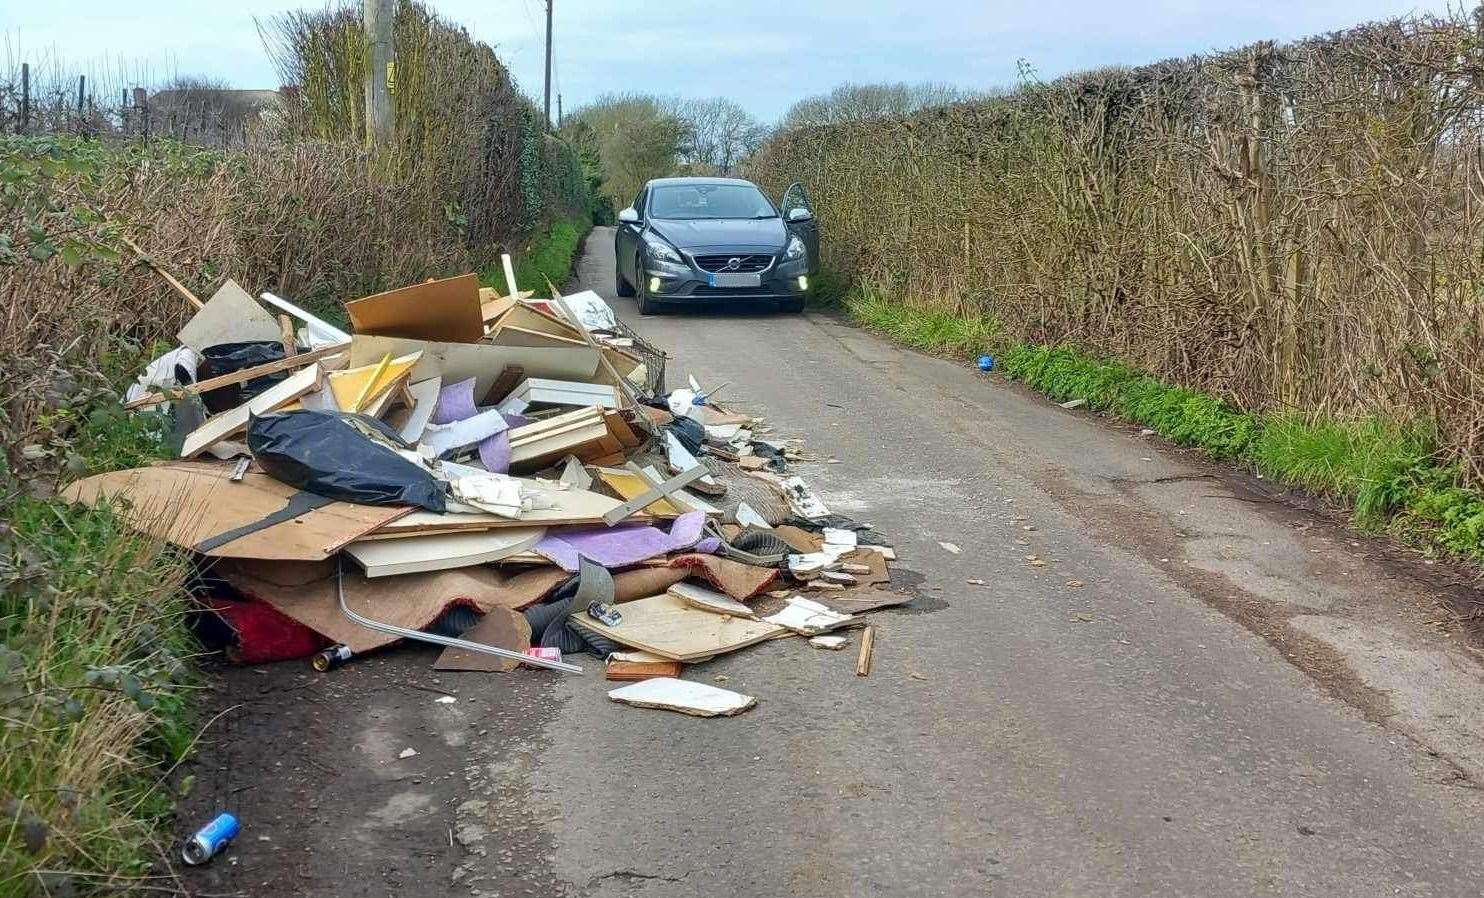 A driver struggled to get past the rubbish. Picture: Martin Deacon